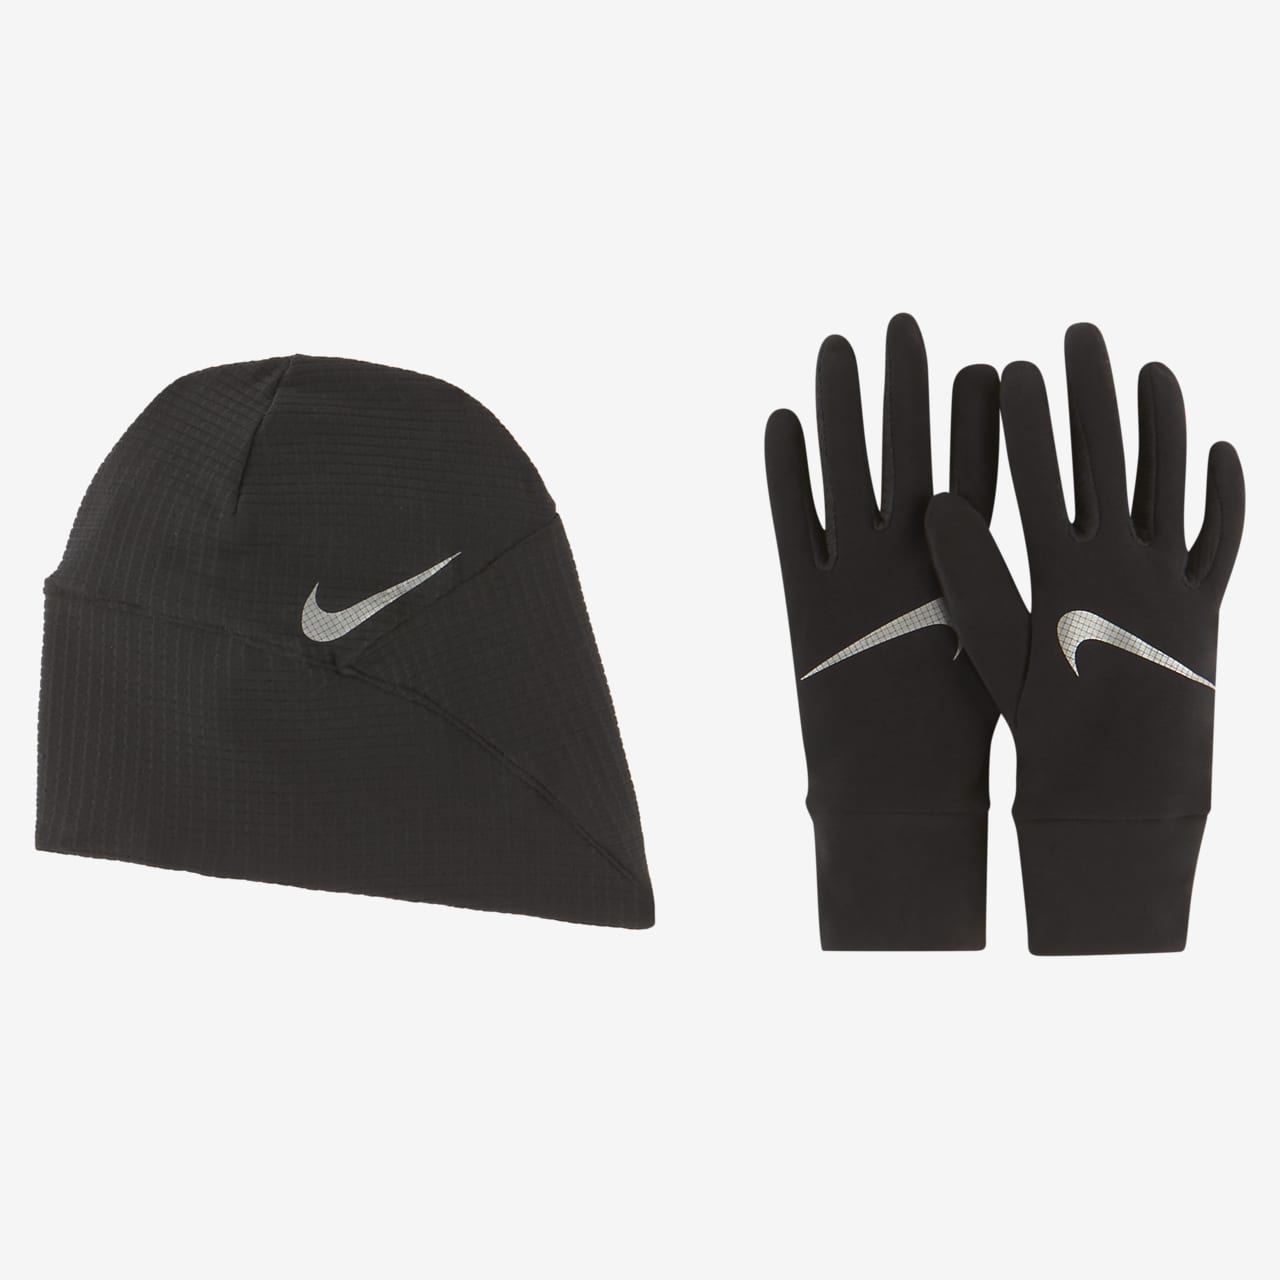 Running Hat and Glove Set. Nike 